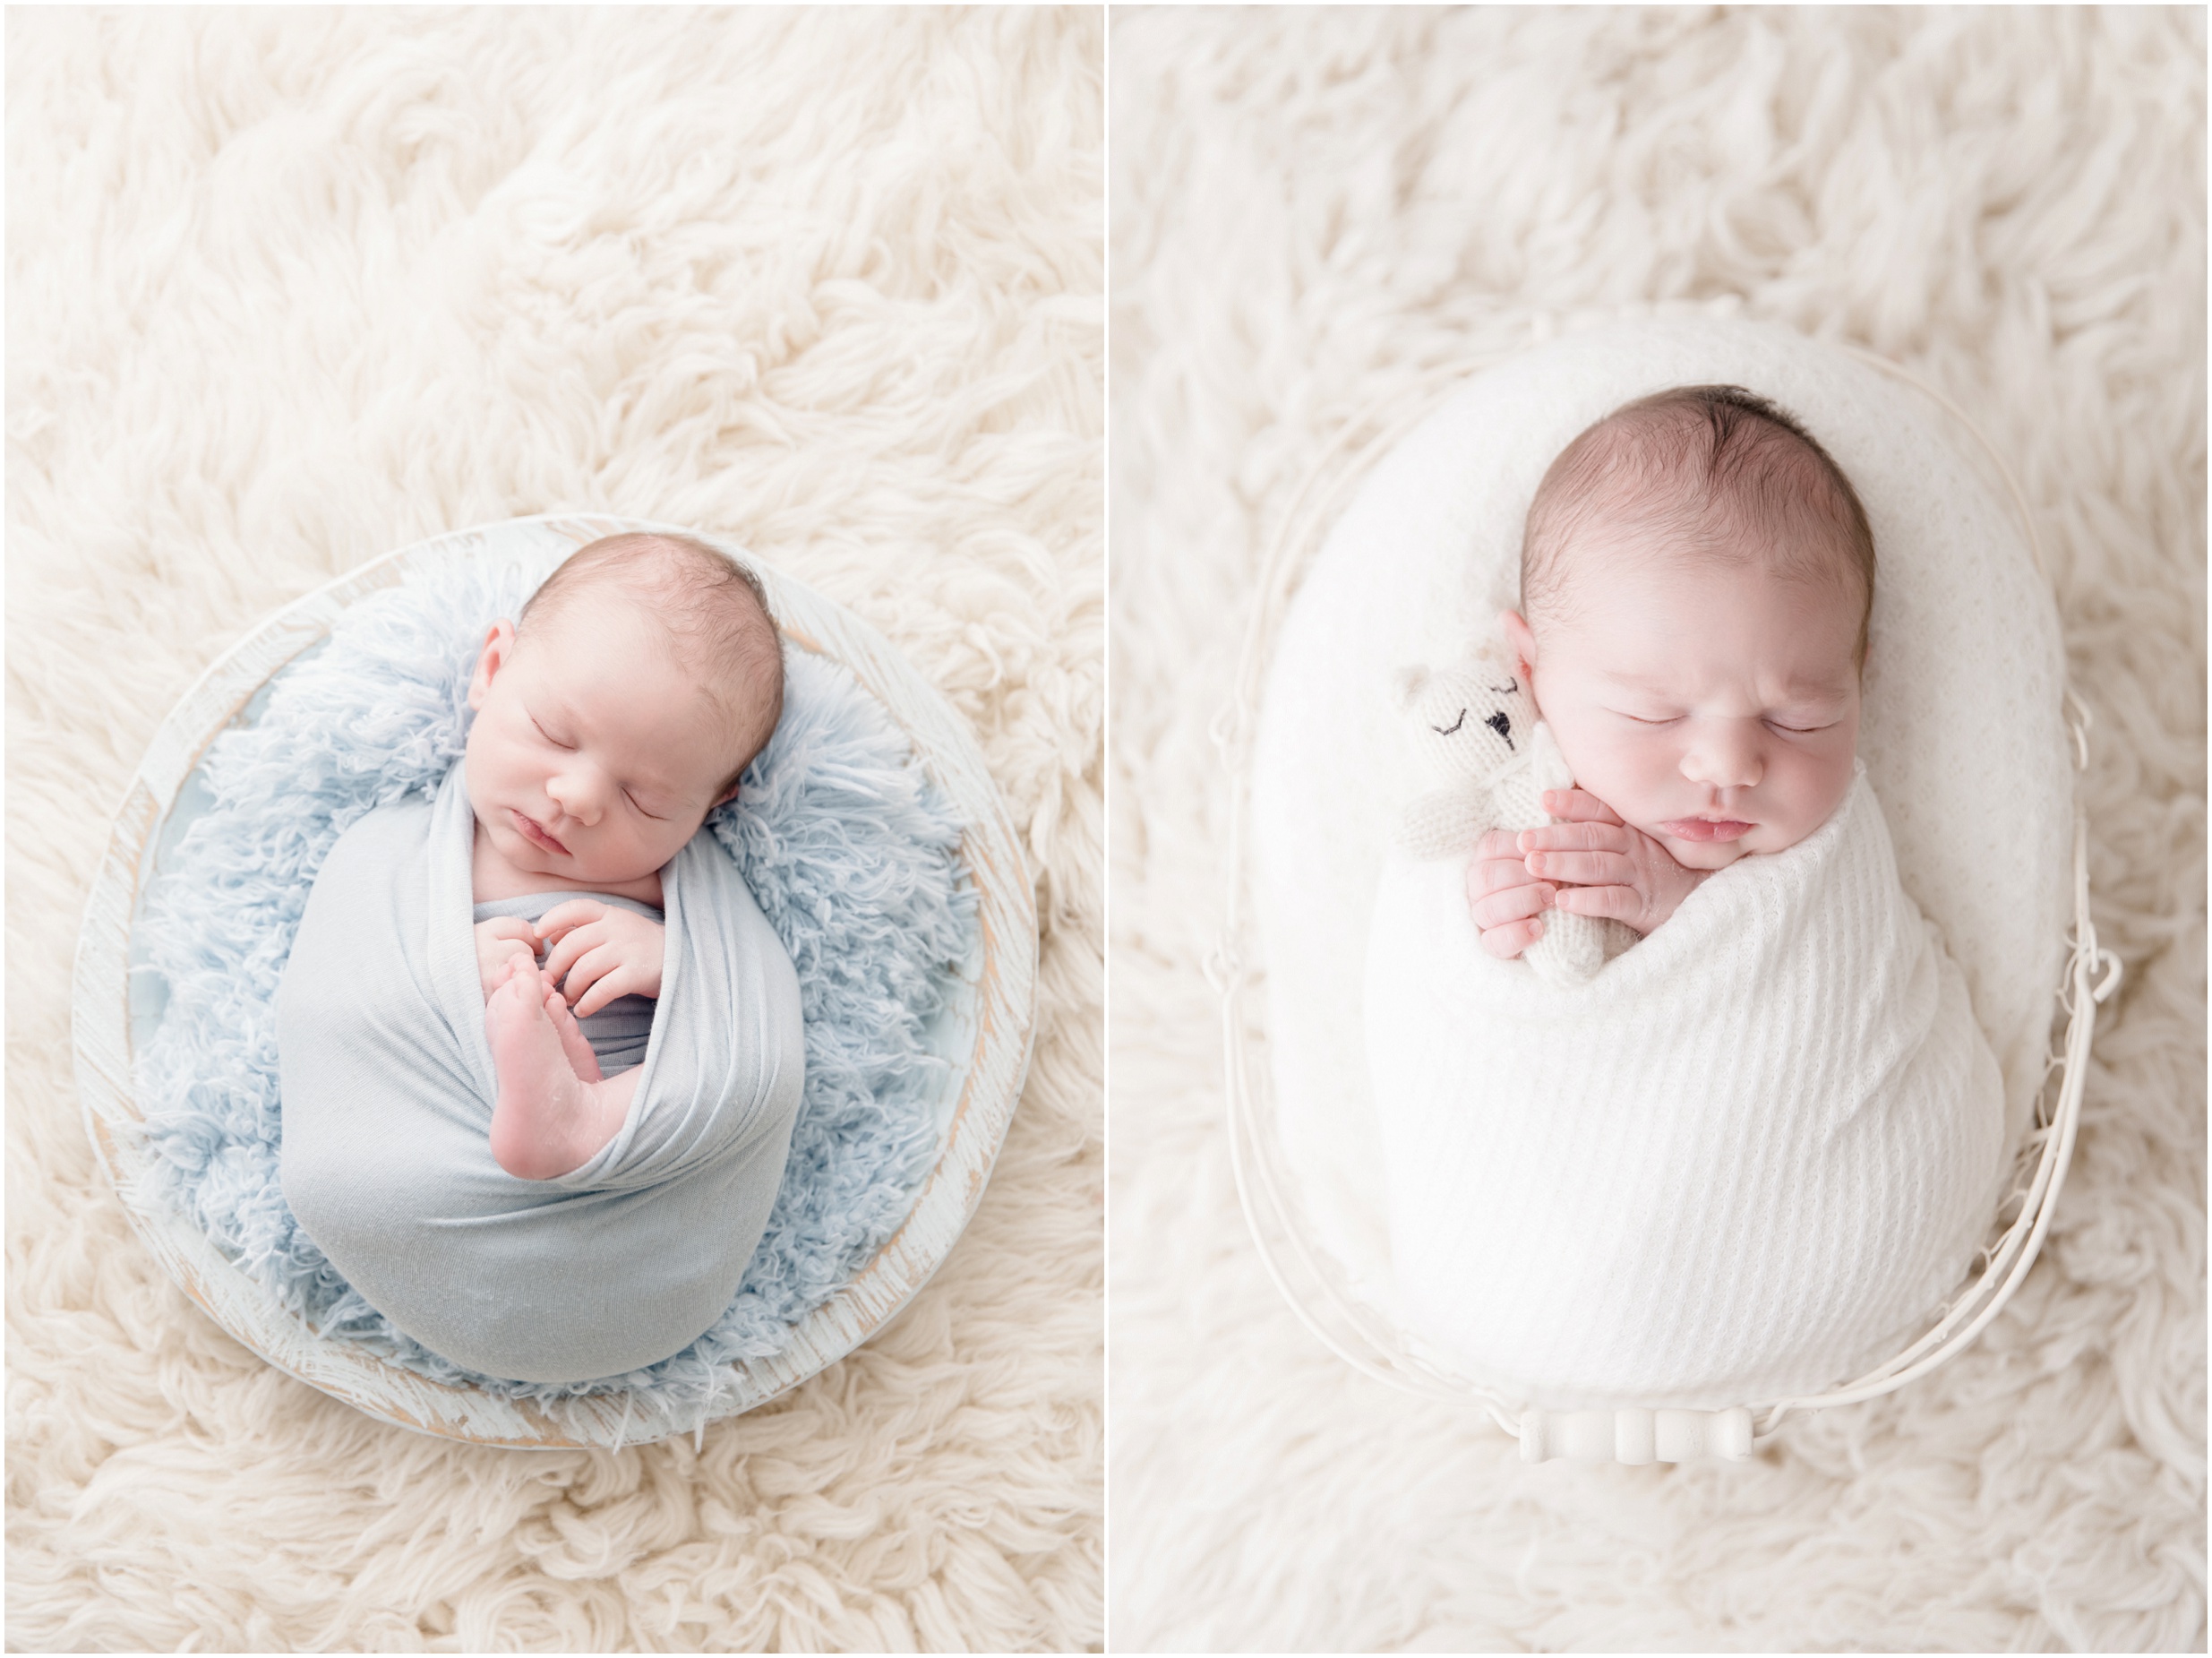 edmonton newborn photographer, nc photography, boy newborn photos, st albert newborn photographer, edmonton family photographer